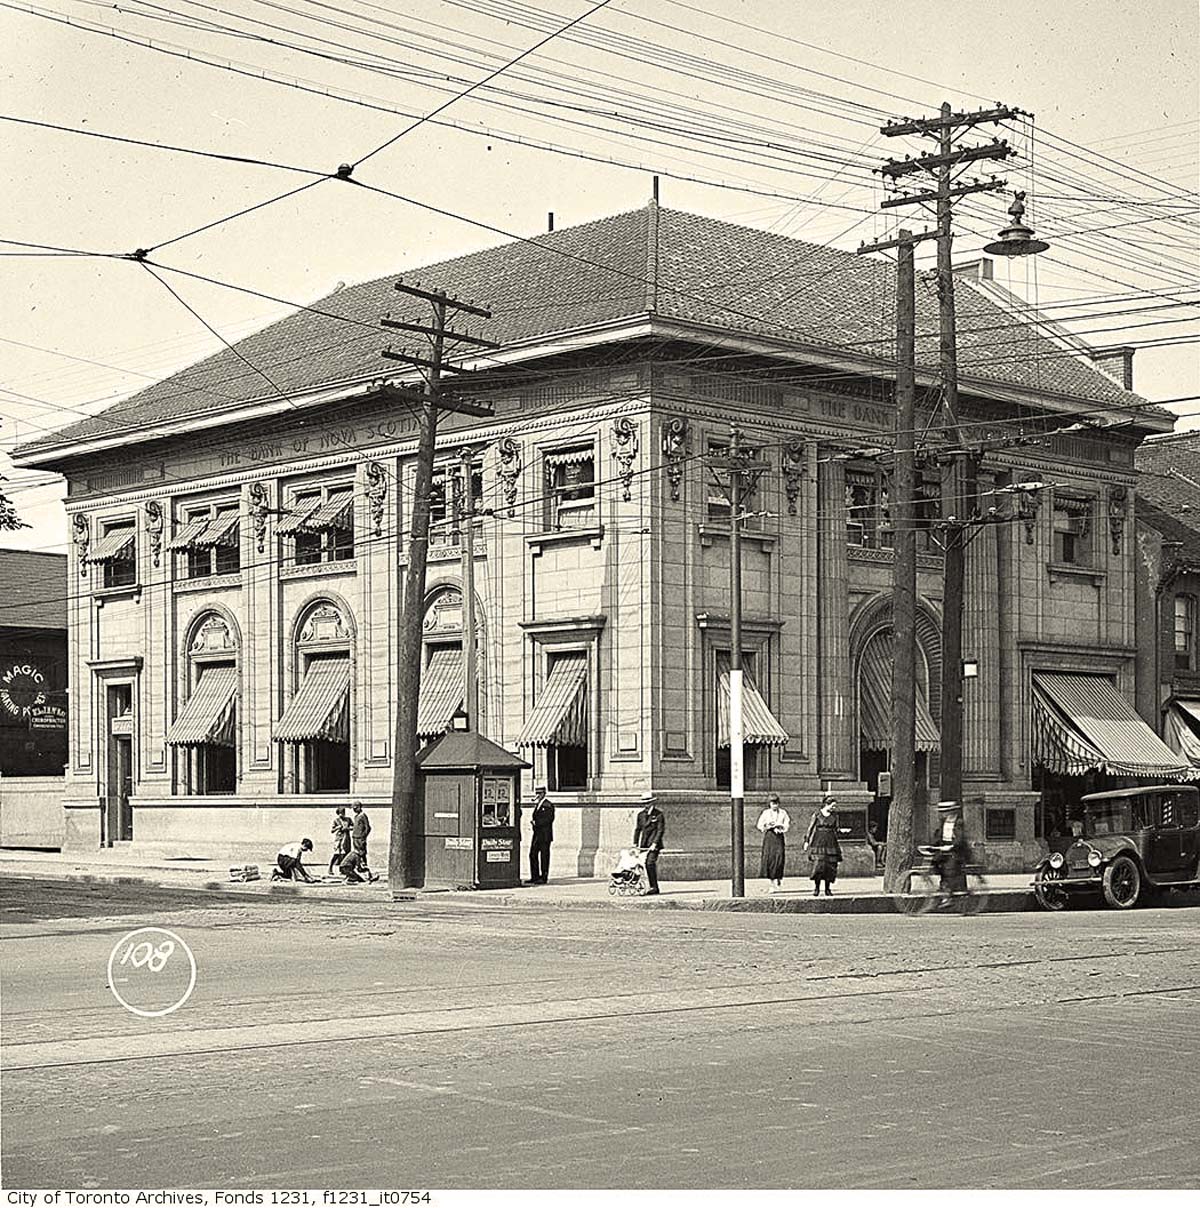 Toronto. The bank of Nova Scotia, 1919